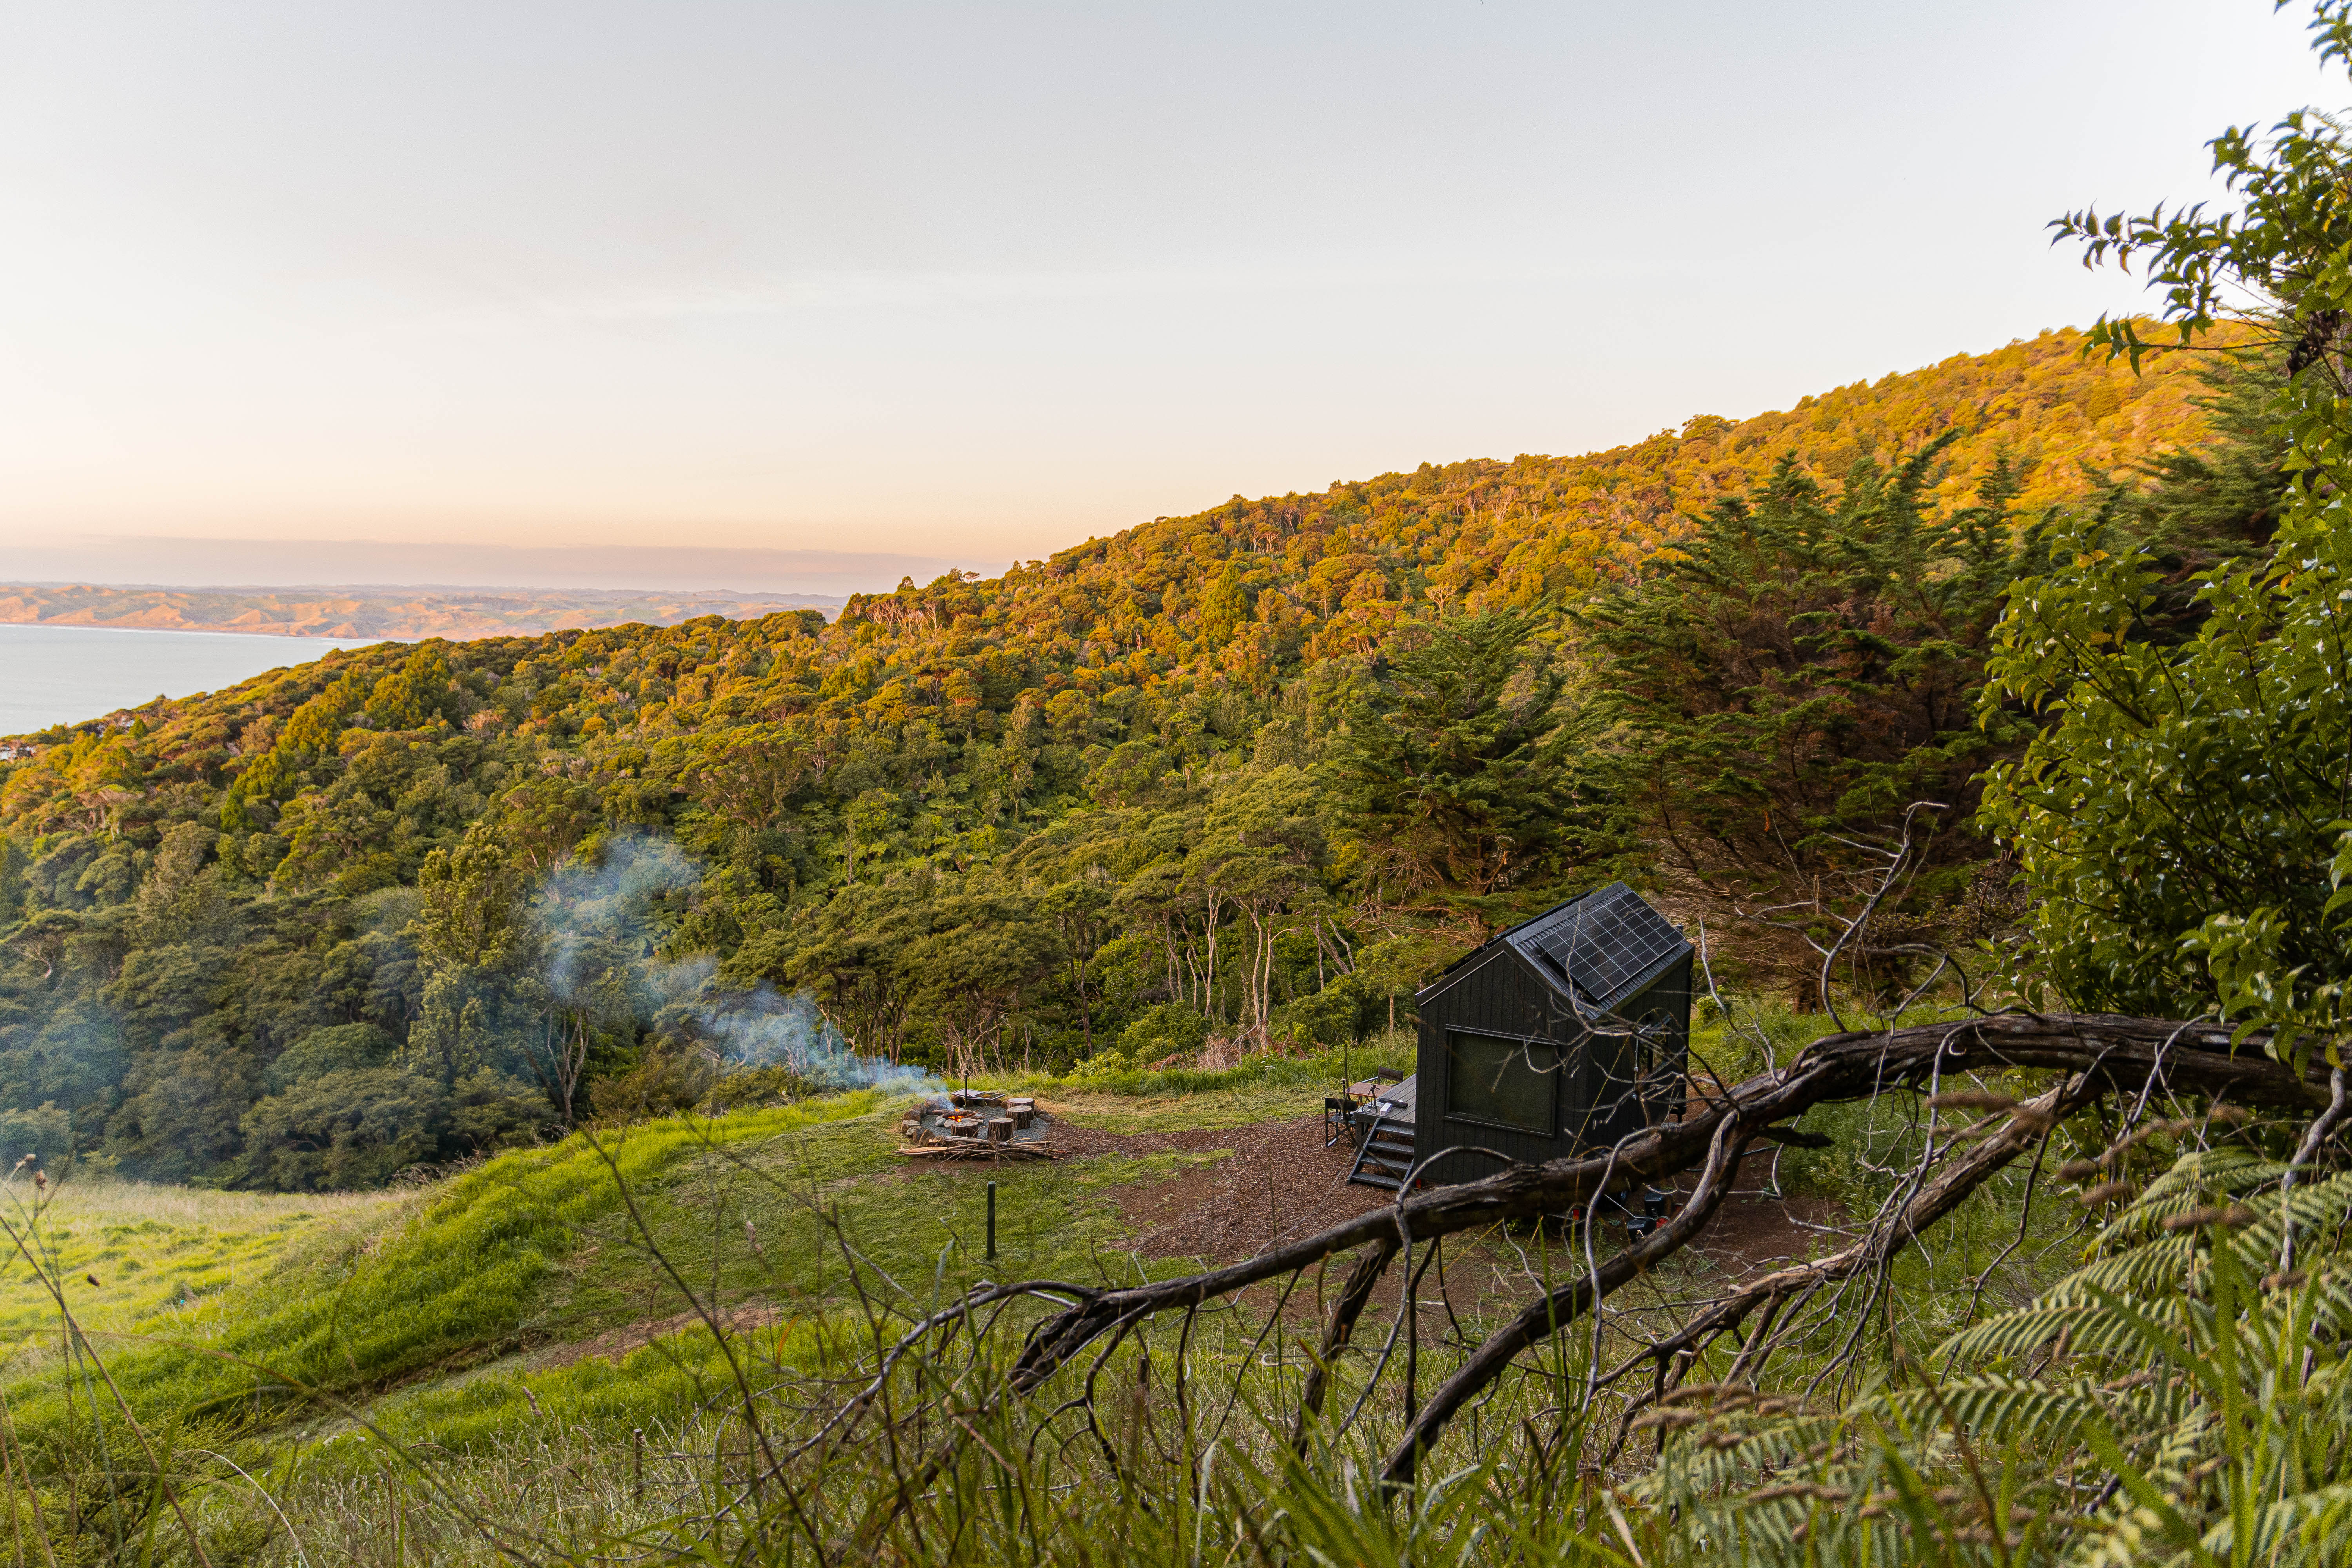 Raglan hilltop retreat - Tiny home with breathtaking views - travel escape.